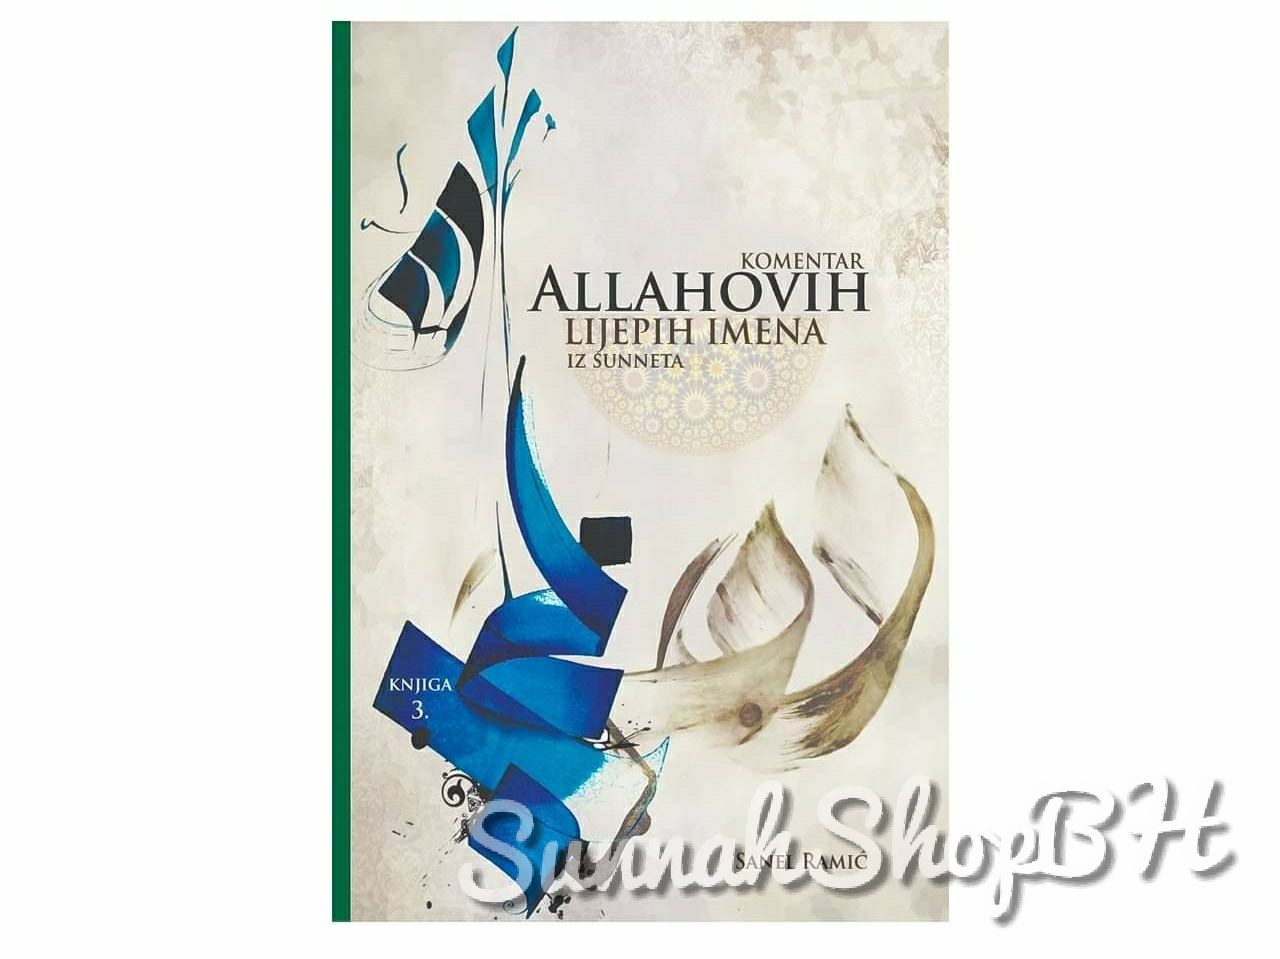 Islamske knjige - Komentar Allahovih lijepih imena - knjiga 3